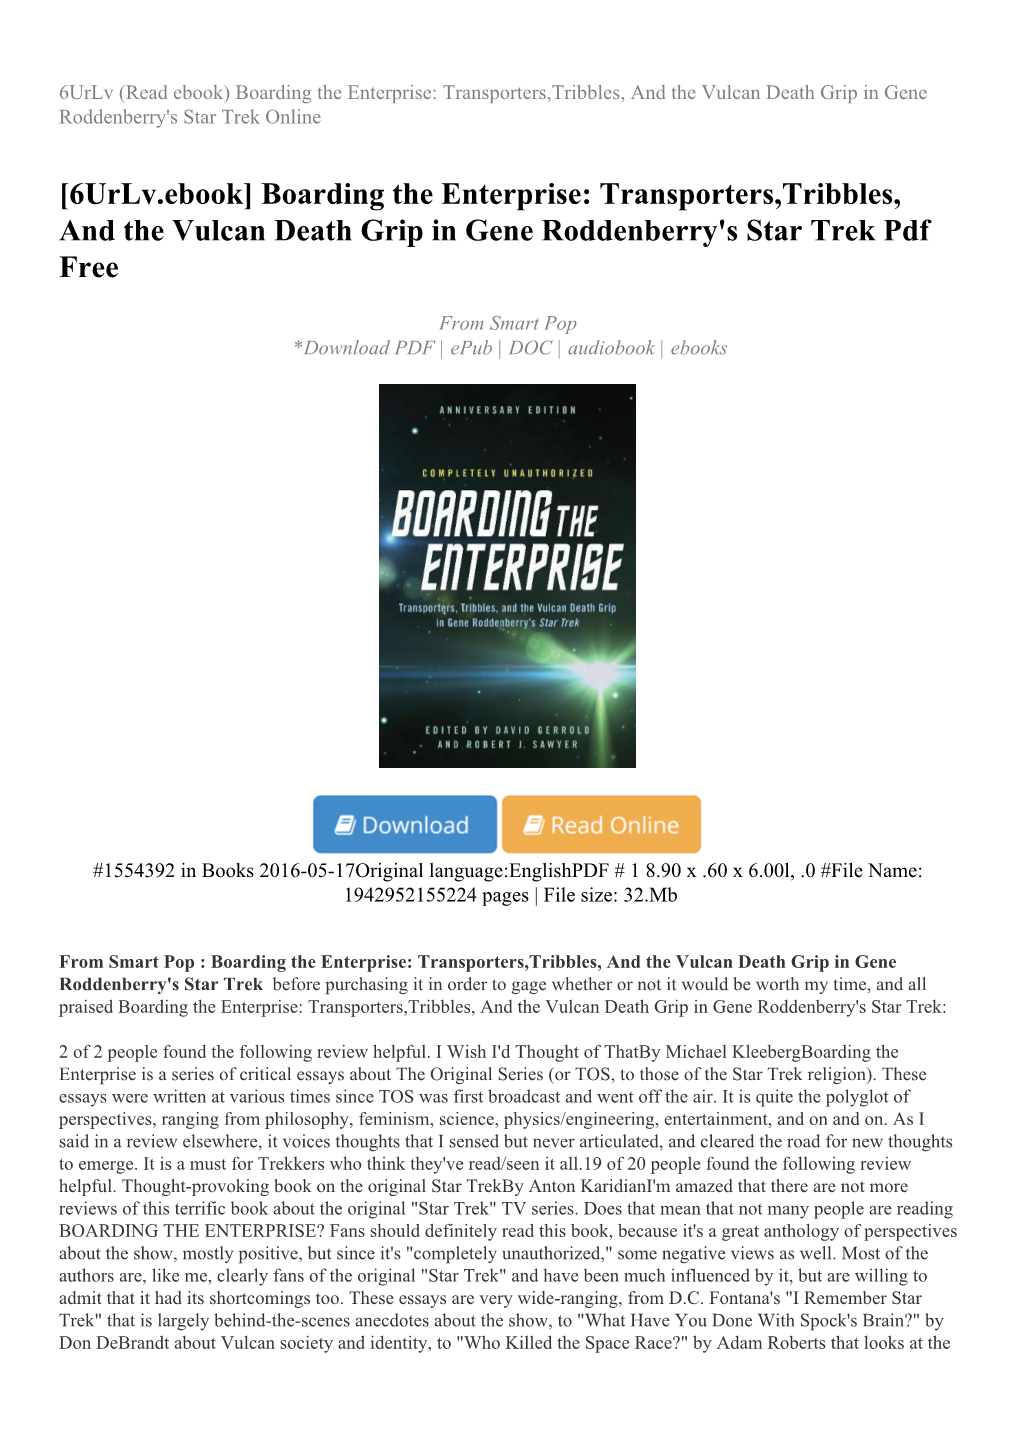 Boarding the Enterprise: Transporters,Tribbles, and the Vulcan Death Grip in Gene Roddenberry's Star Trek Online